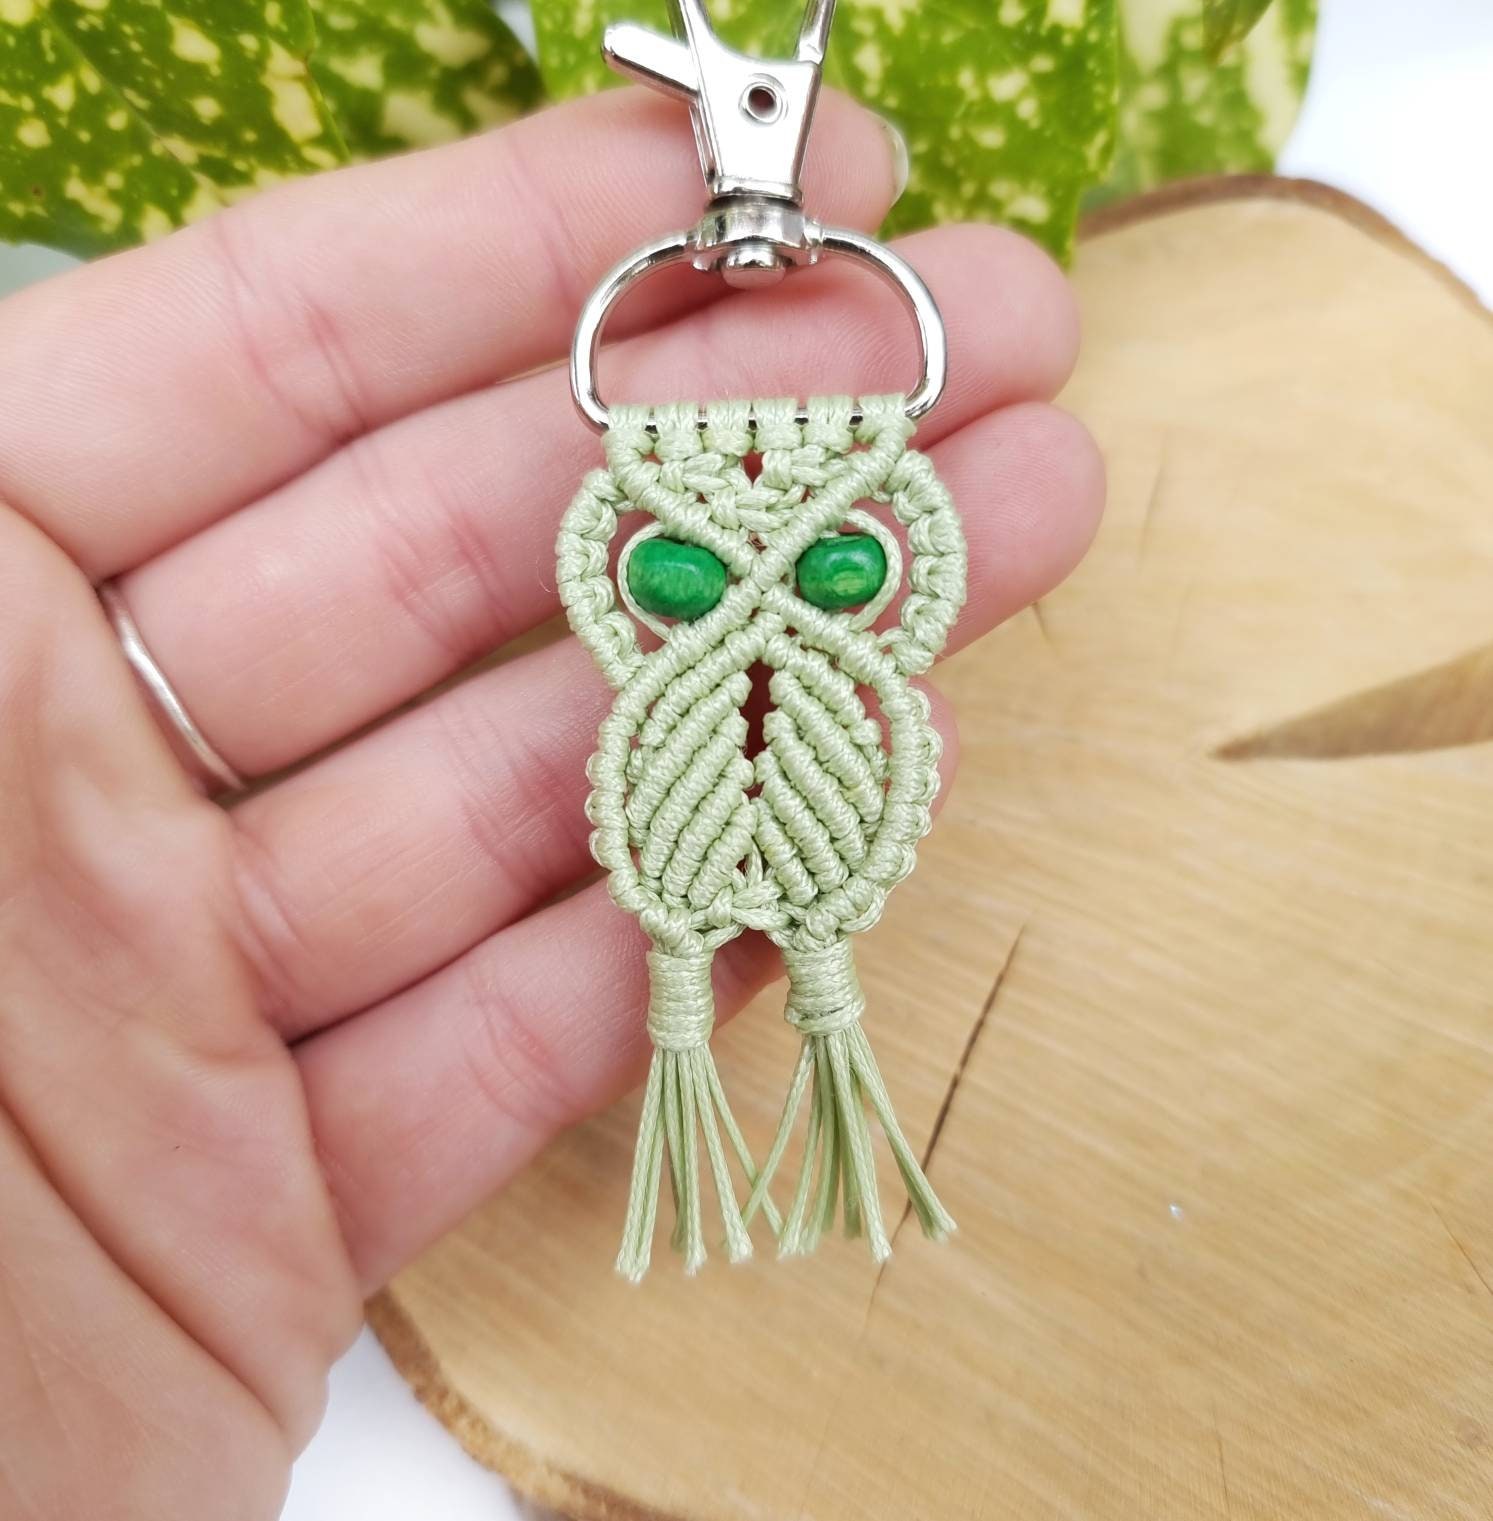 GATOKIT Pre-Cut Macrame Kit for Adults Beginners, DIY Macrame Owl Keychain Kits with Unique Craft Design (2 Pcs Owl Keychain (White+Beige))